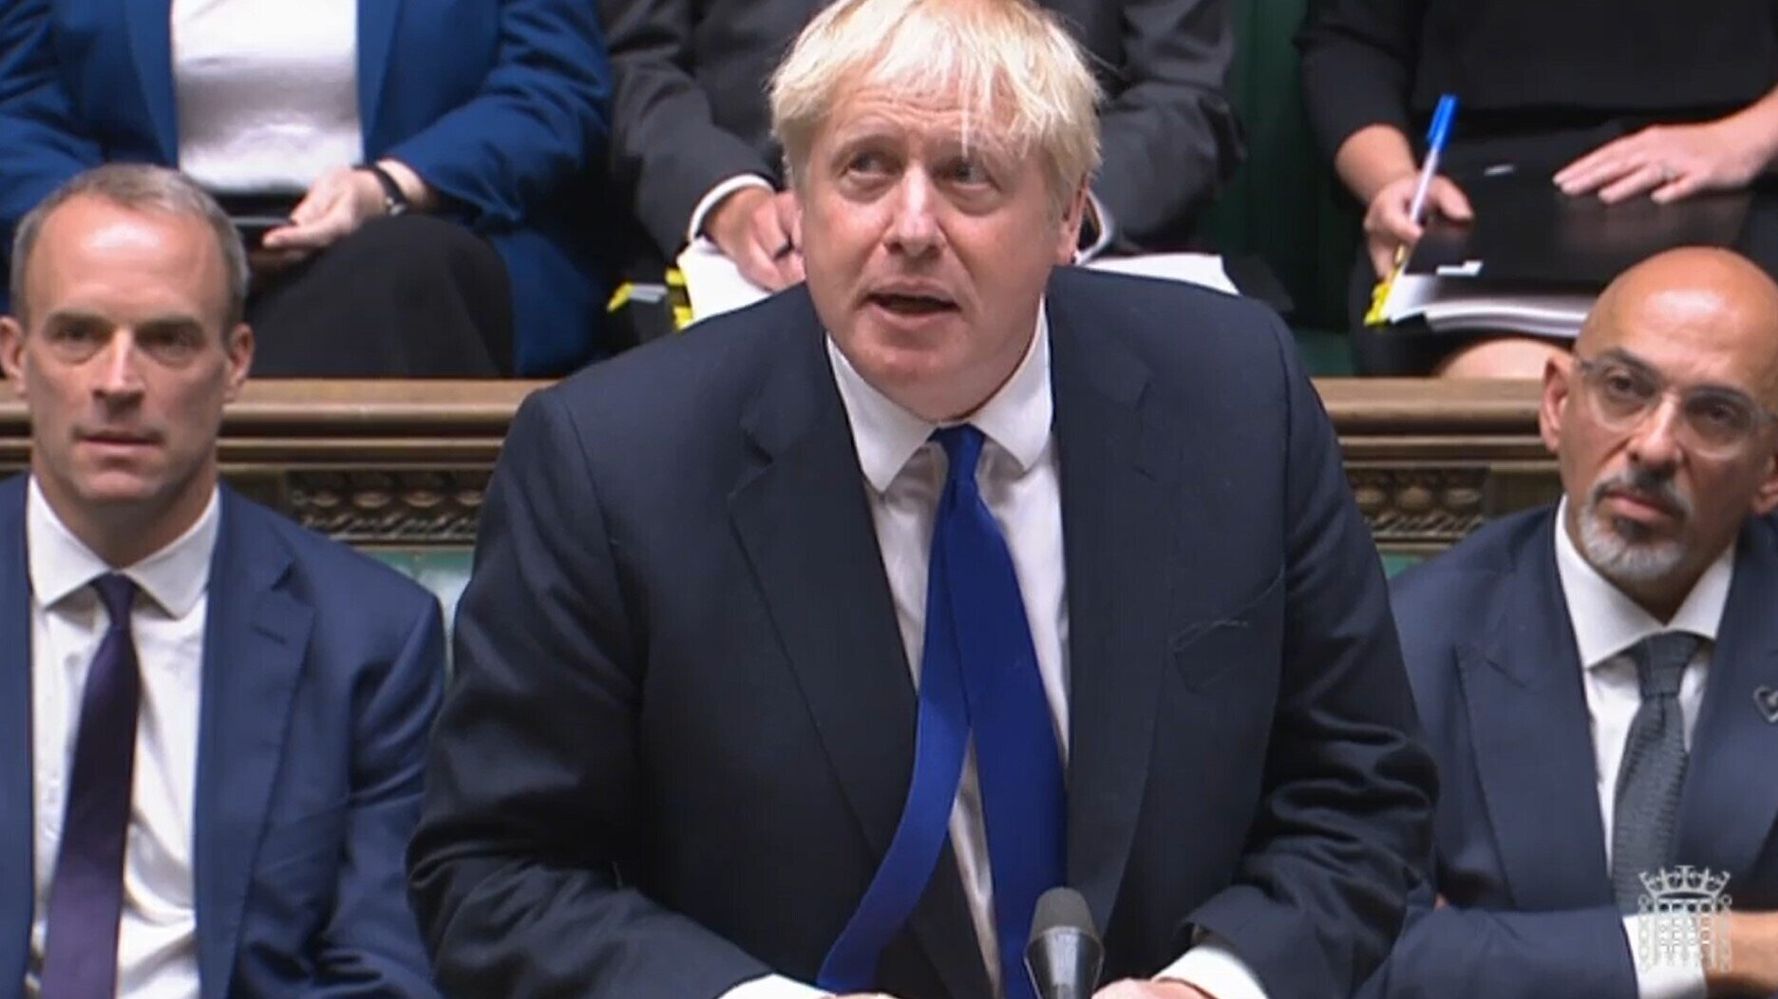 PMQs: Boris Johnson Condemned For Giving 'Predatory' Chris Pincher A Job